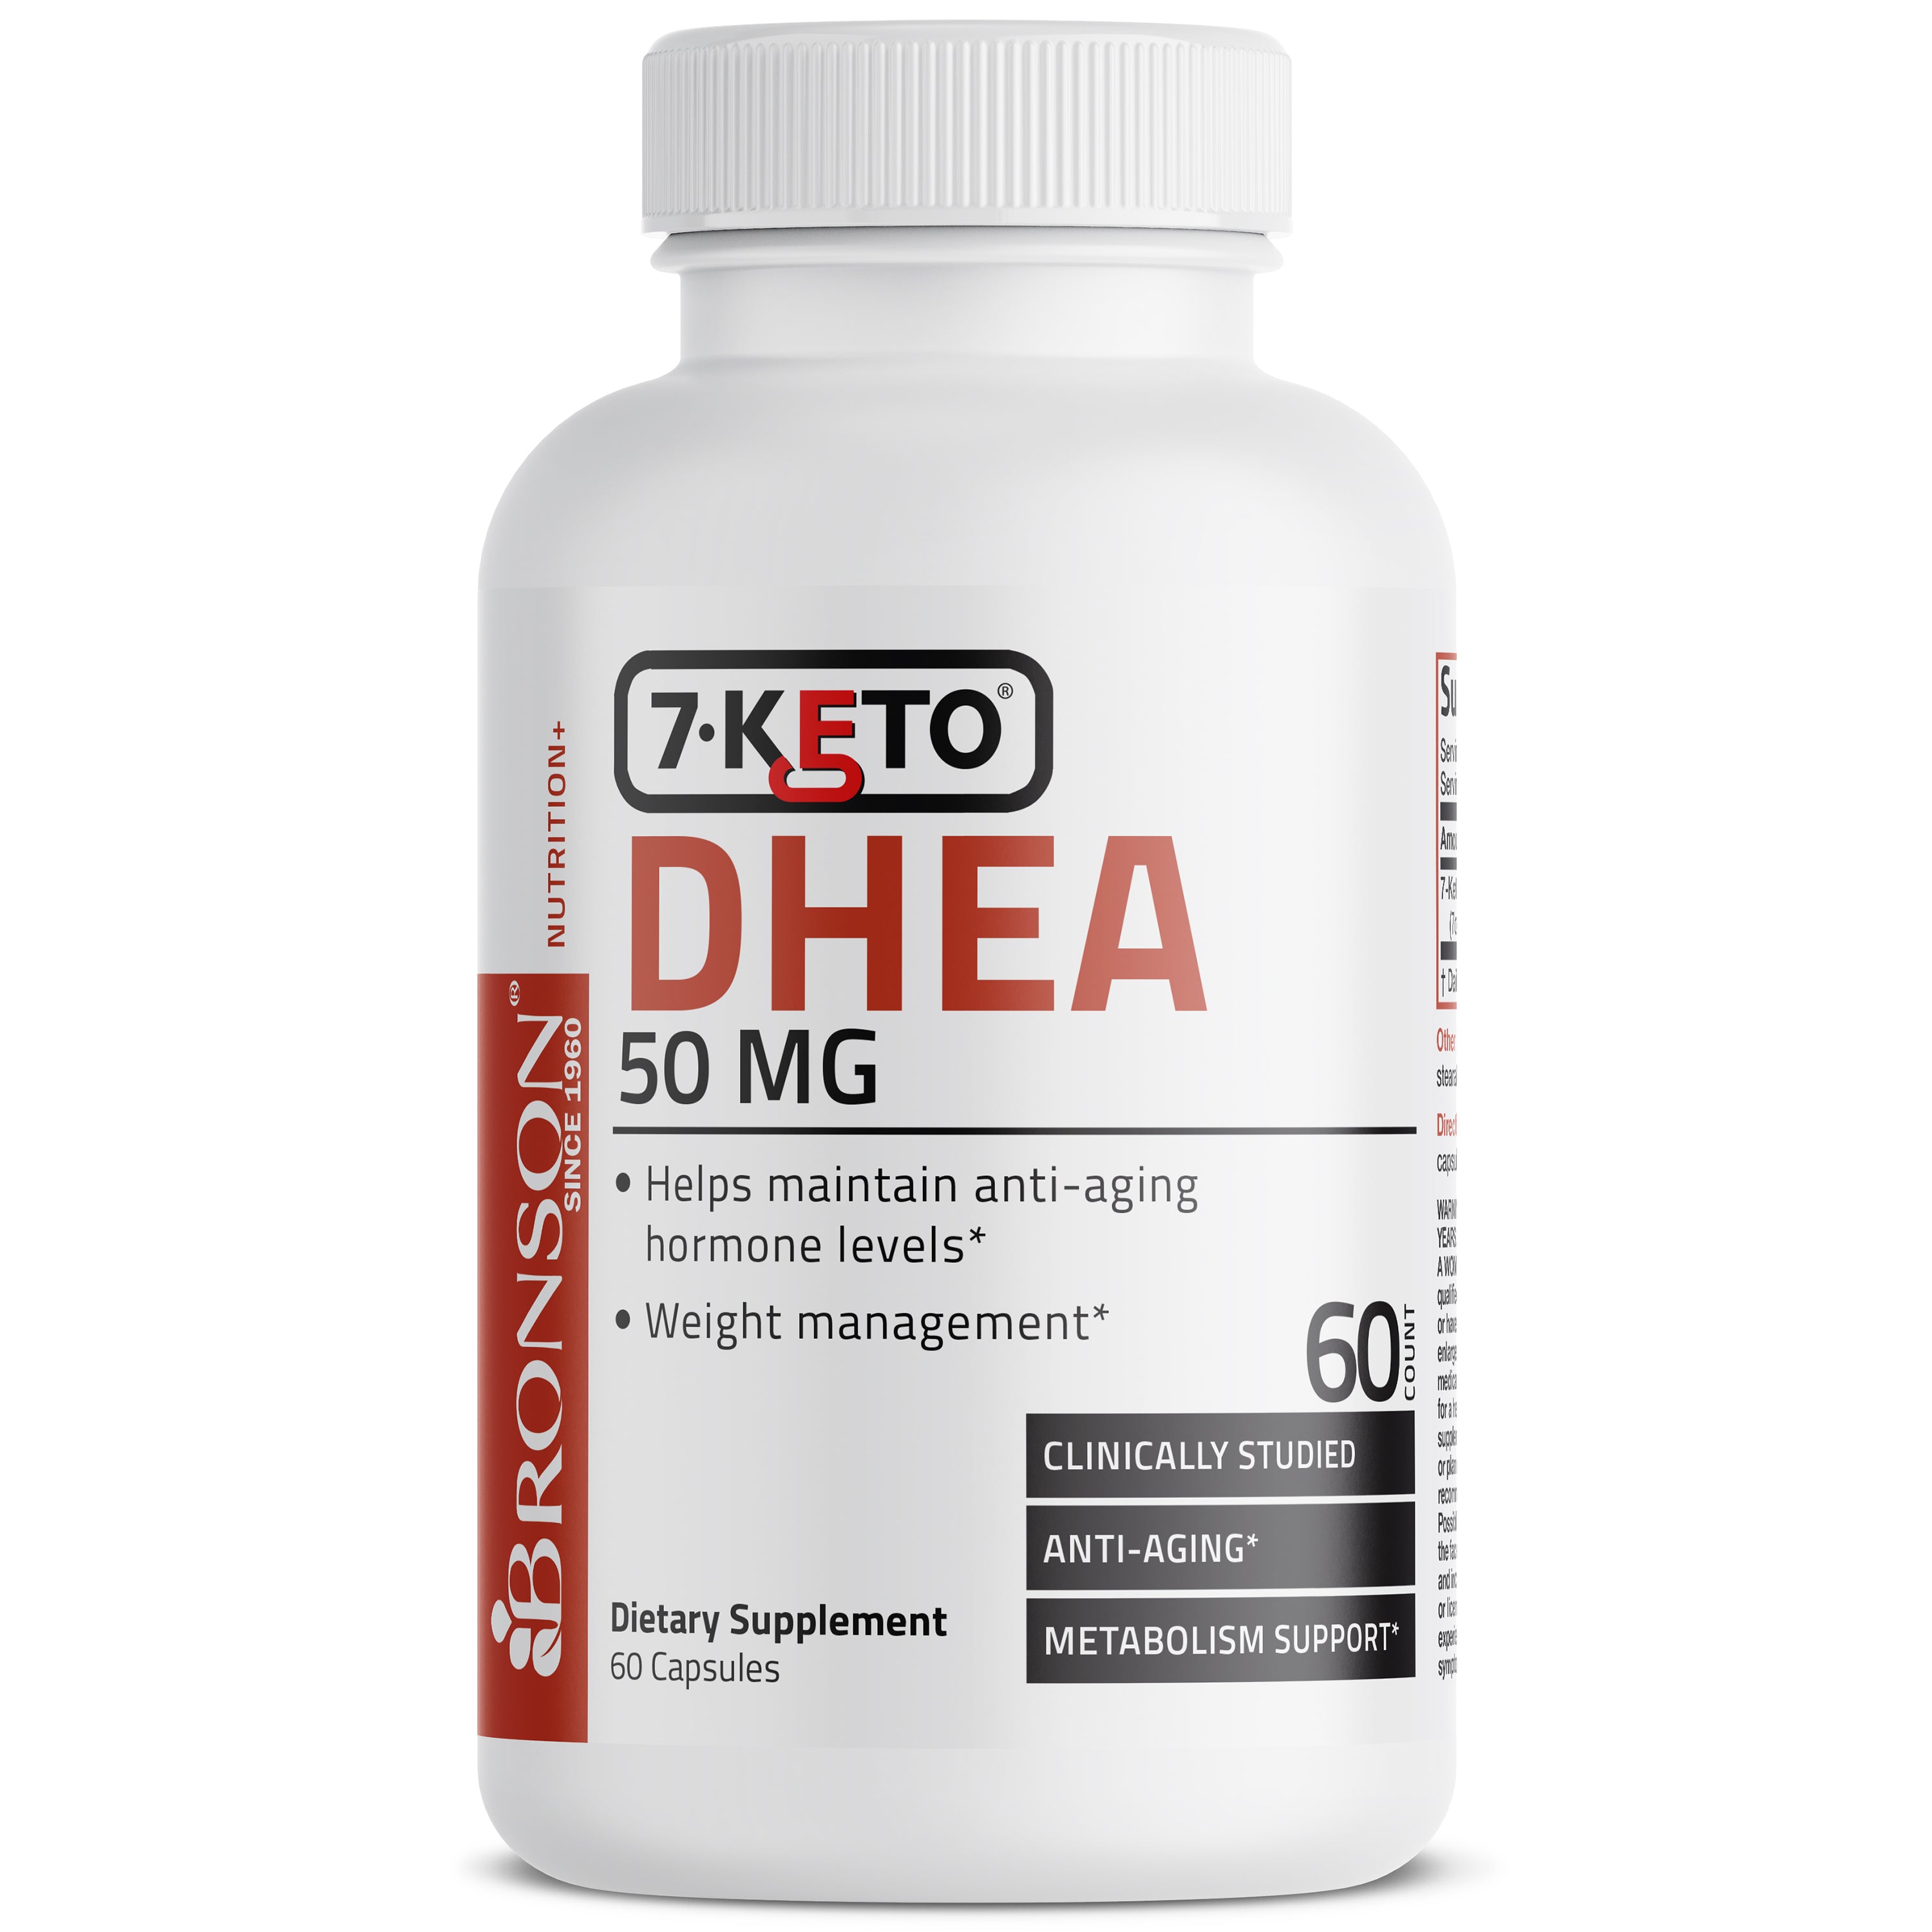 7-Keto® DHEA - 50 mg - 60 Capsules view 1 of 4